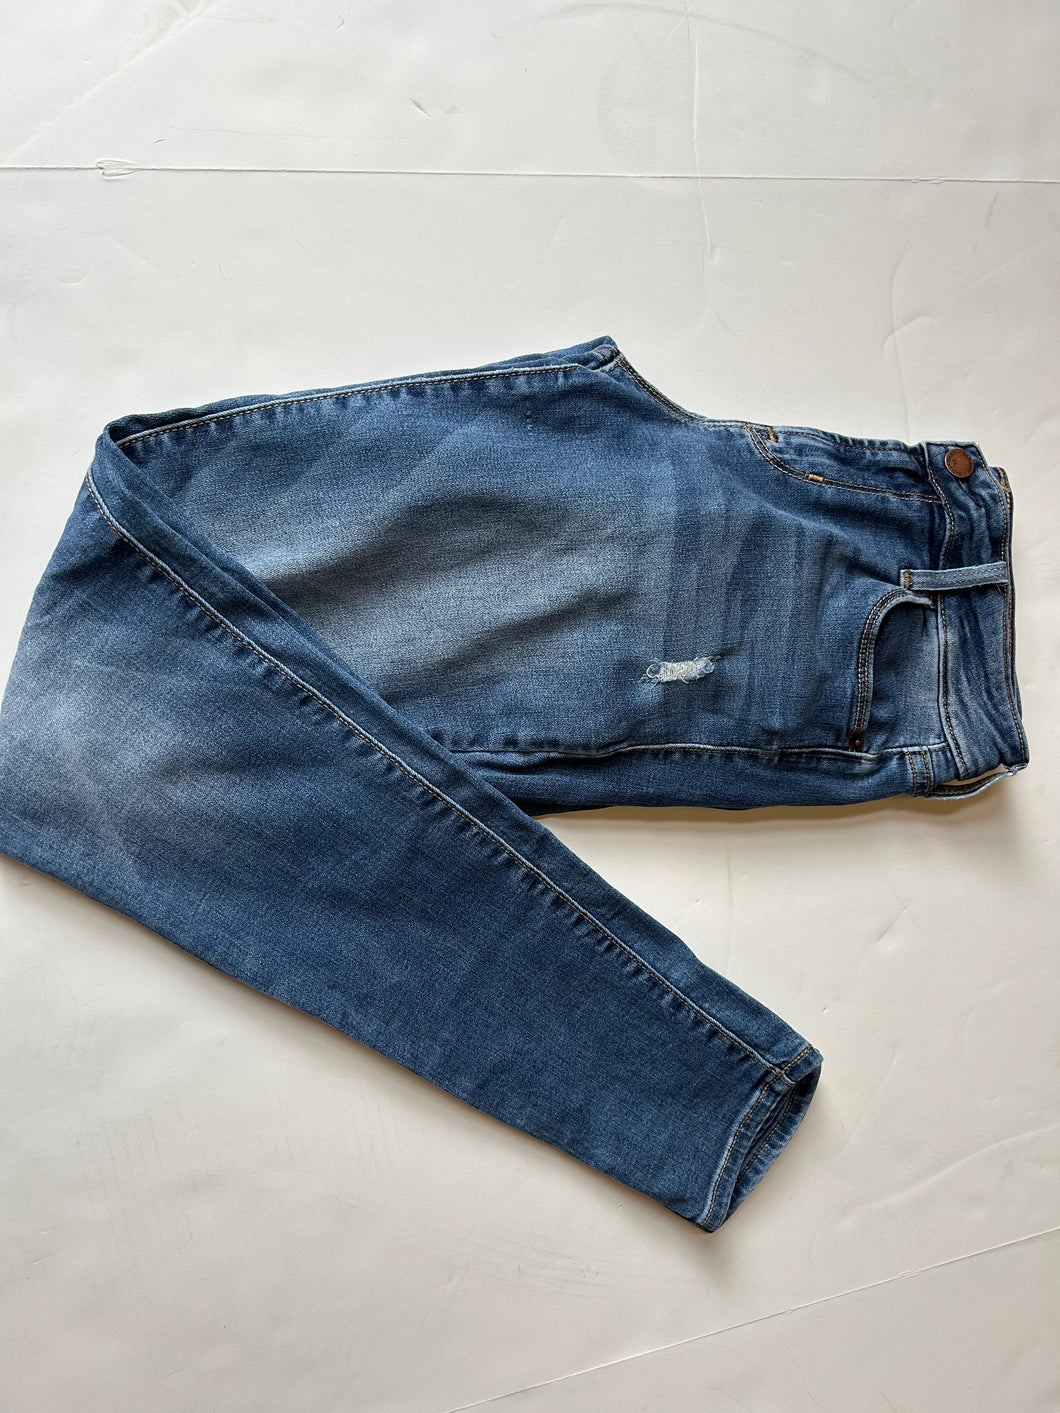 Denim Old Navy Jeans, 2